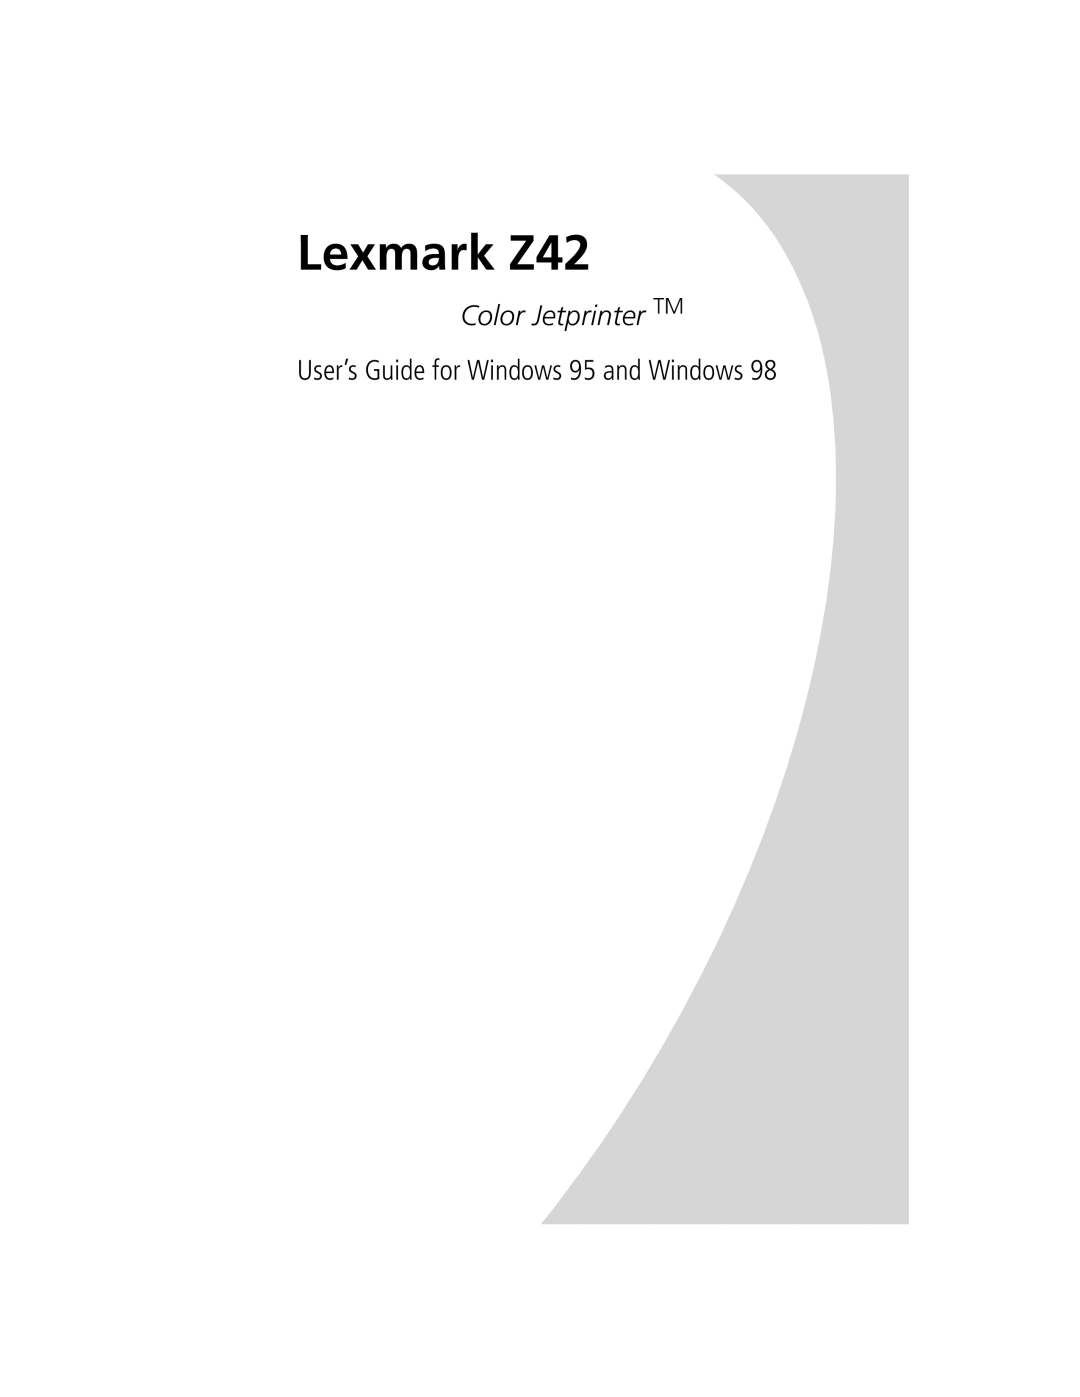 Lexmark manual Lexmark Z42, Color Jetprinter TM, User’s Guide for Windows 95 and Windows 